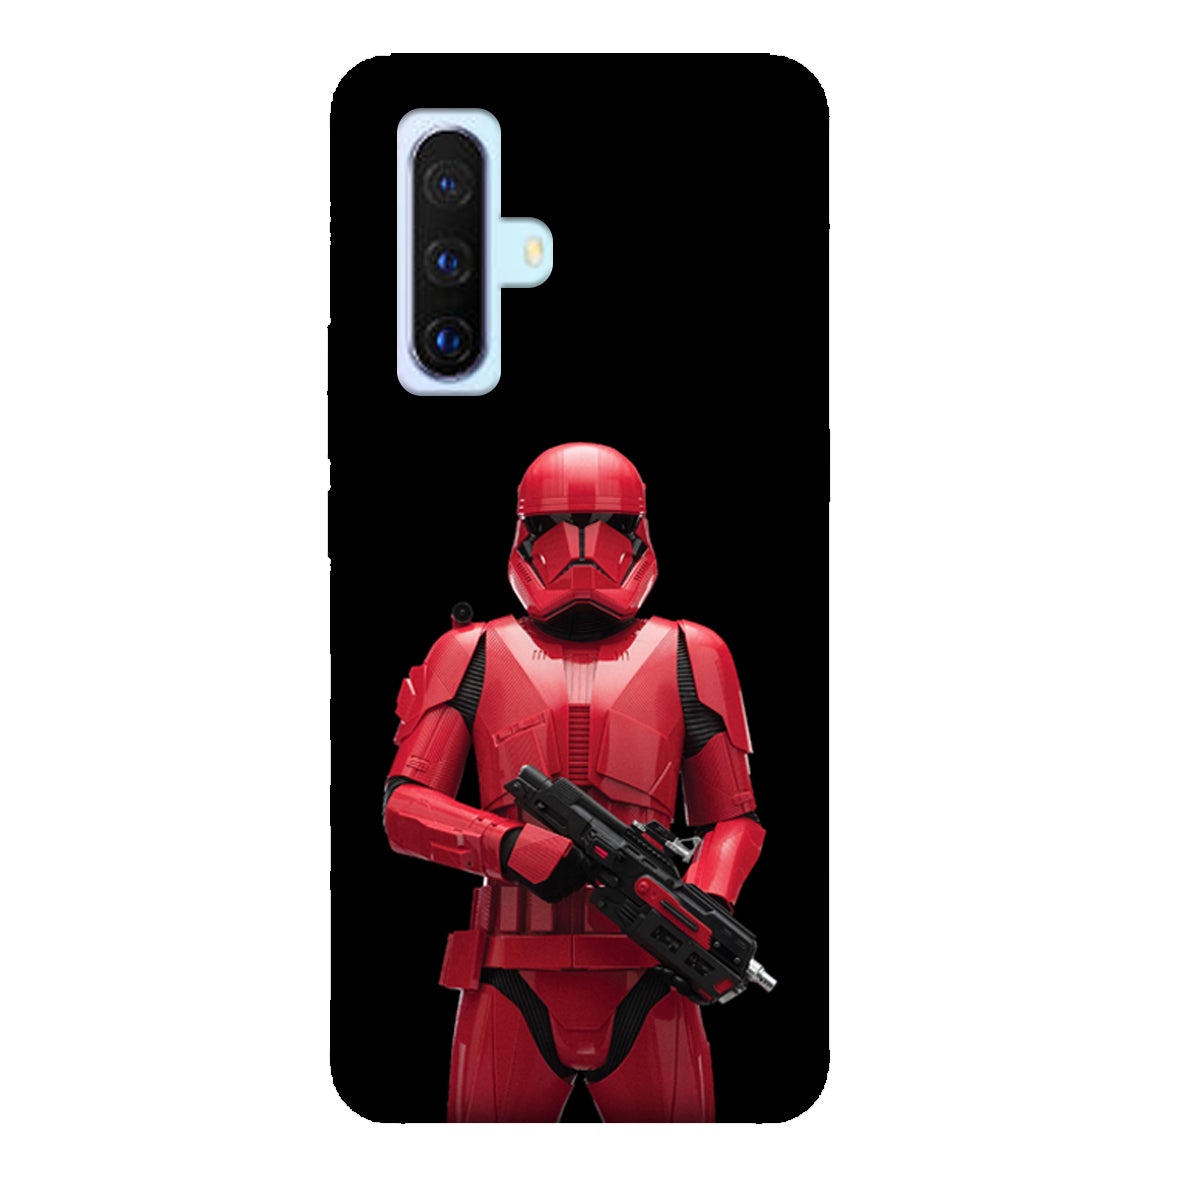 Star Wars - Darth Vader - Red - Mobile Phone Cover - Hard Case - Vivo